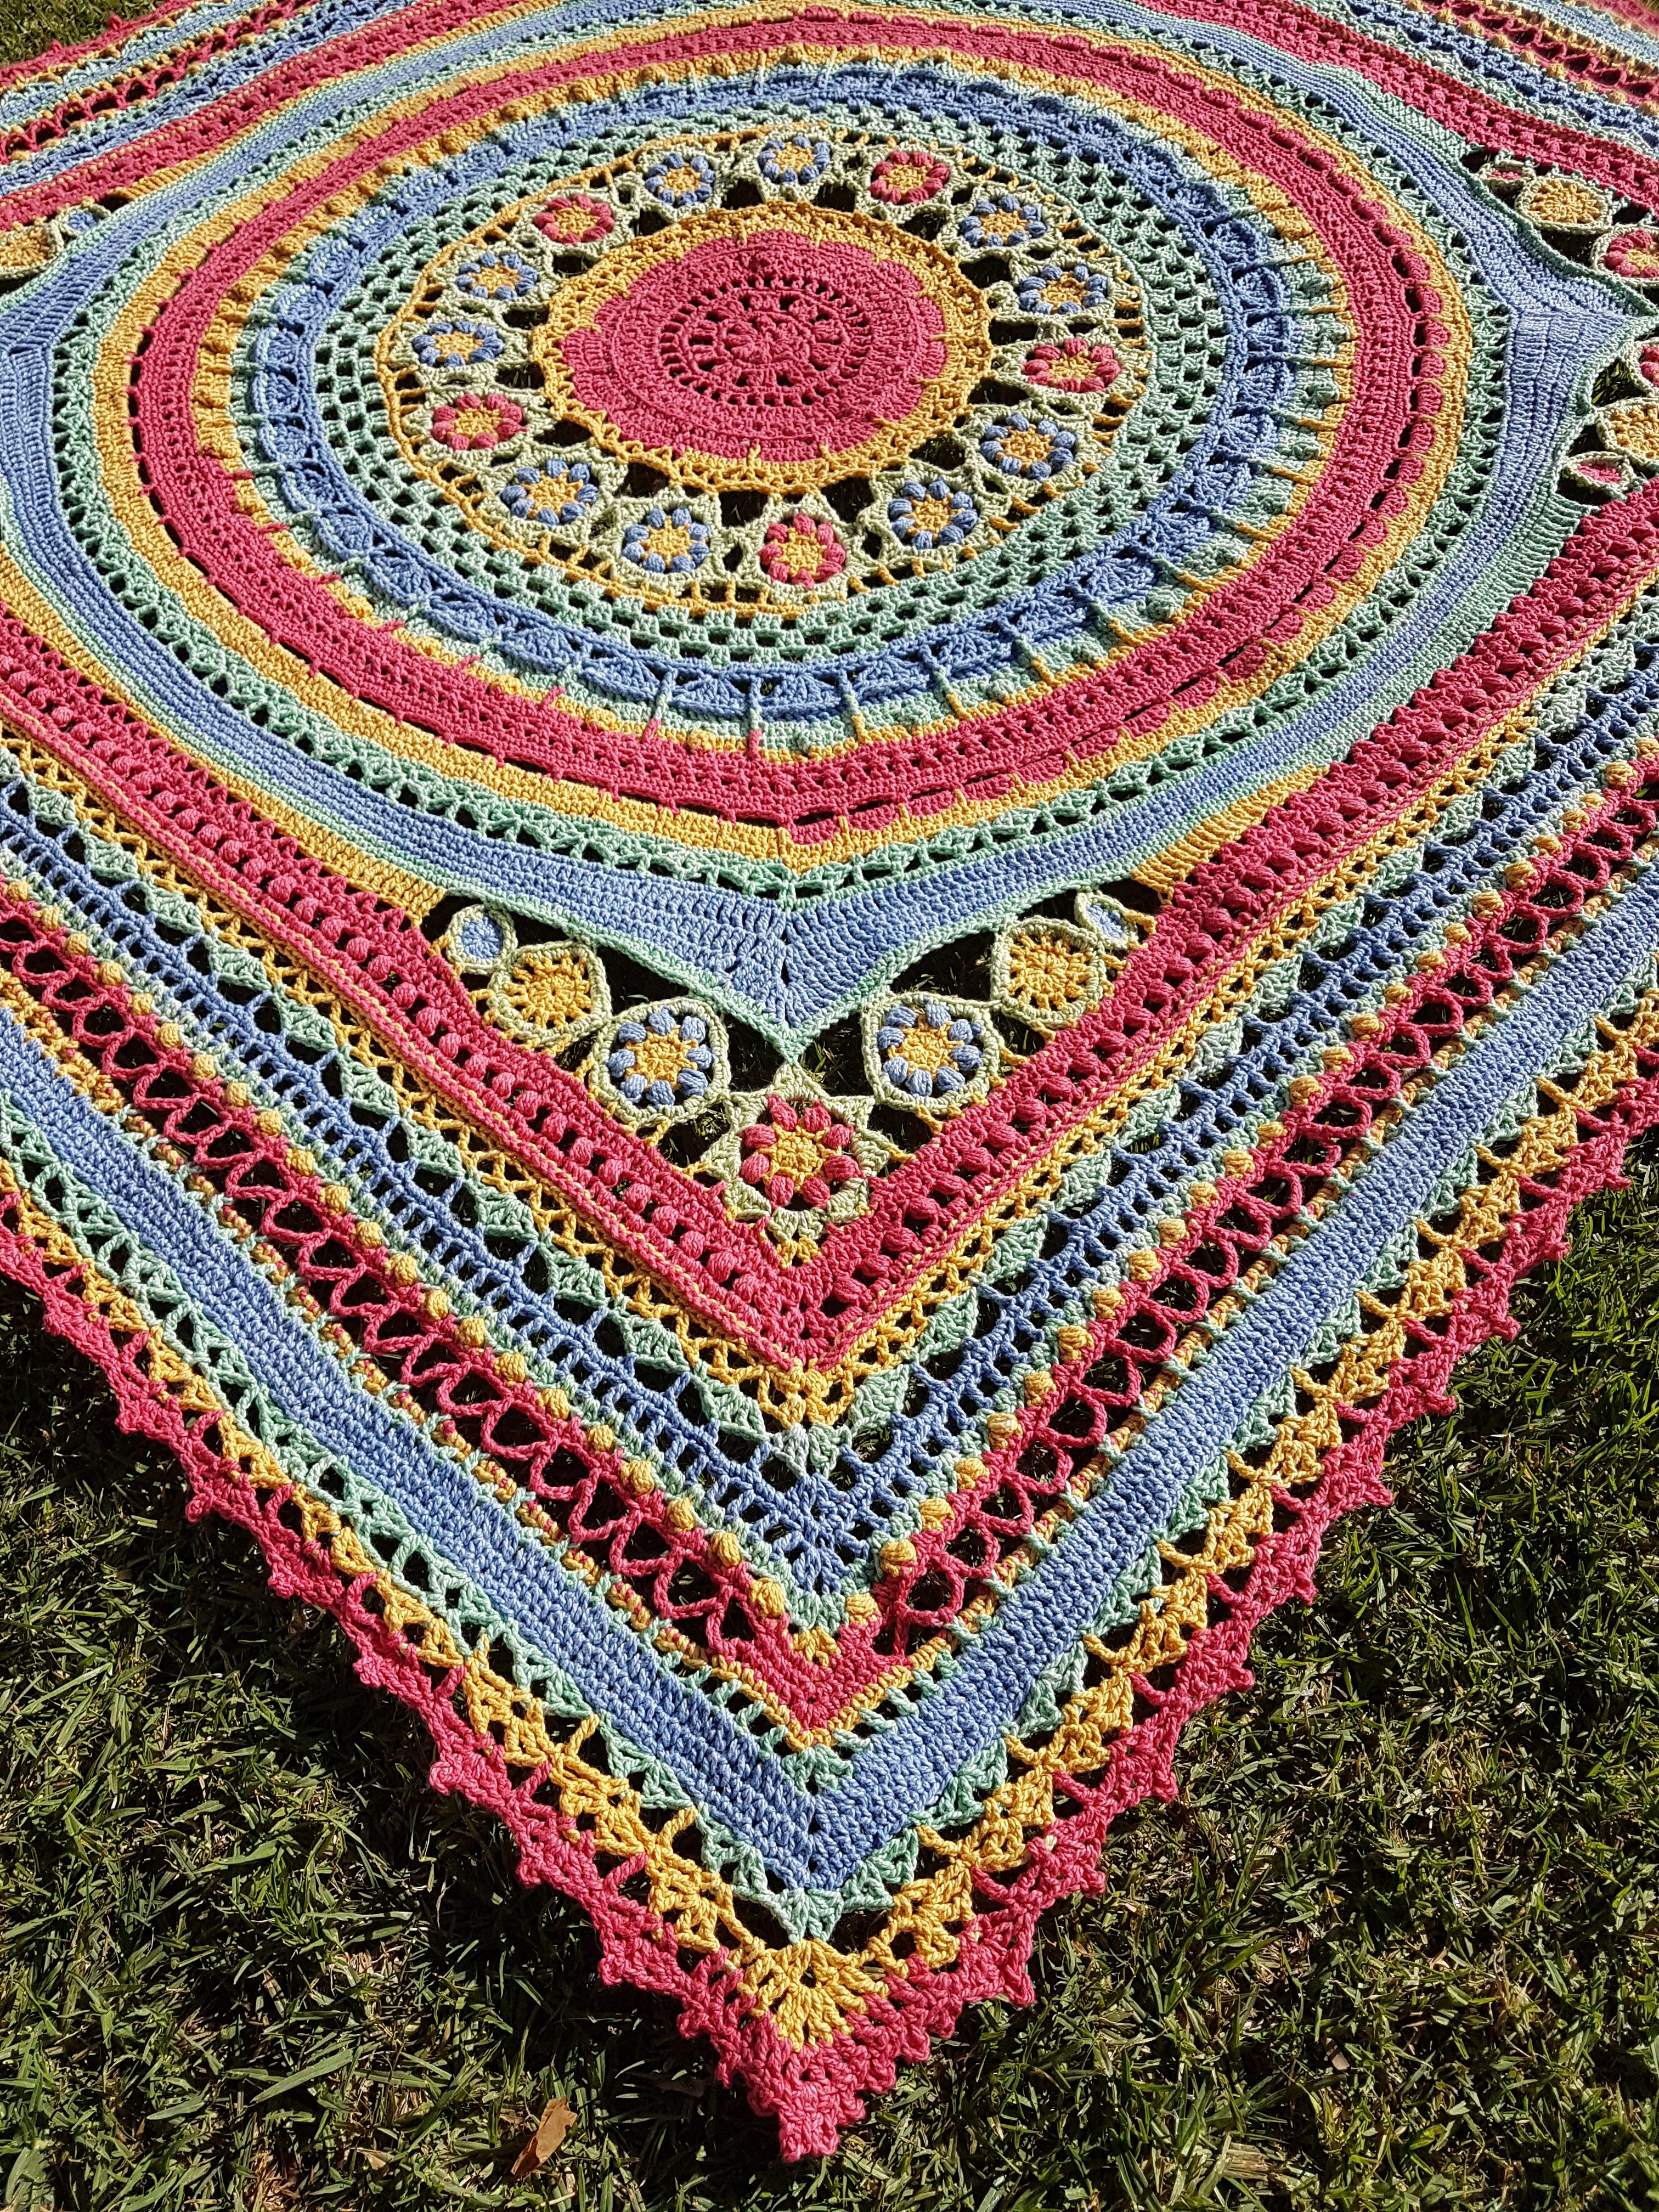 4Mm Crochet Hook Patterns Queen Mother Throw Pattern Mandalaqueen Yarn Online Shopping Usd